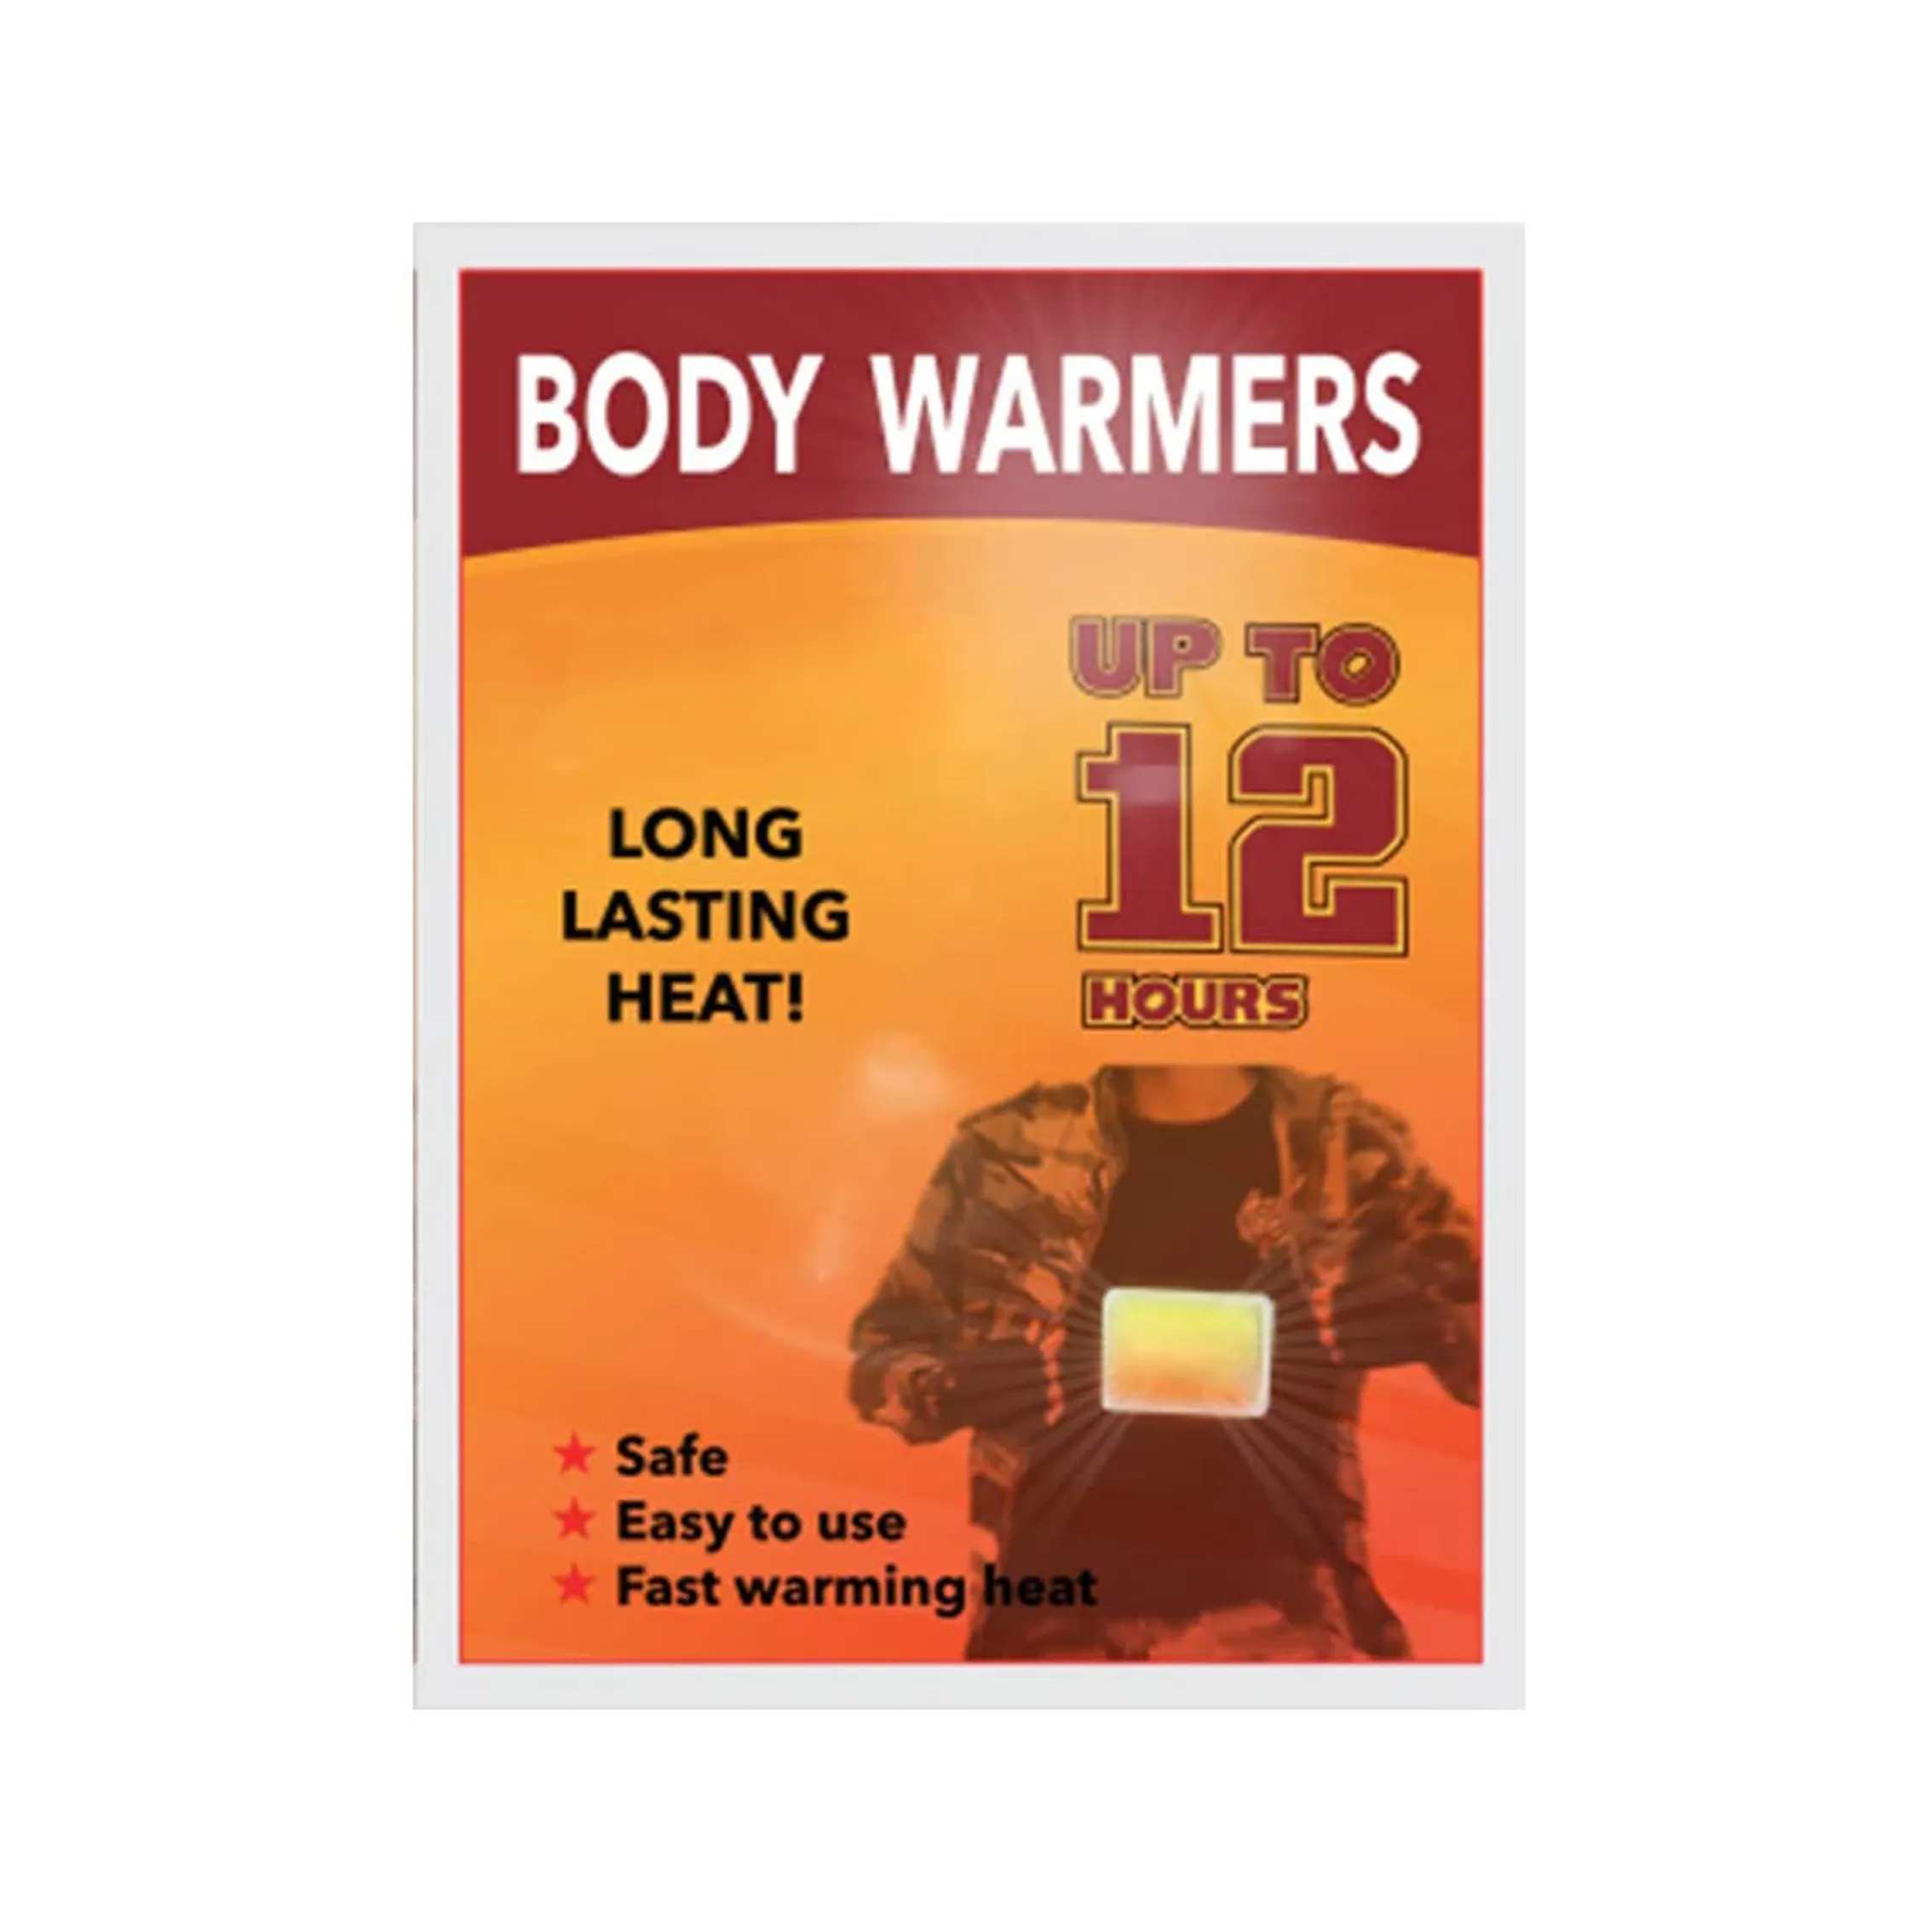 Remendo de auto aquecimento descartável, adesivo de calor para mulheres, almofada corporal quente, 12 horas, aquecedor de calor